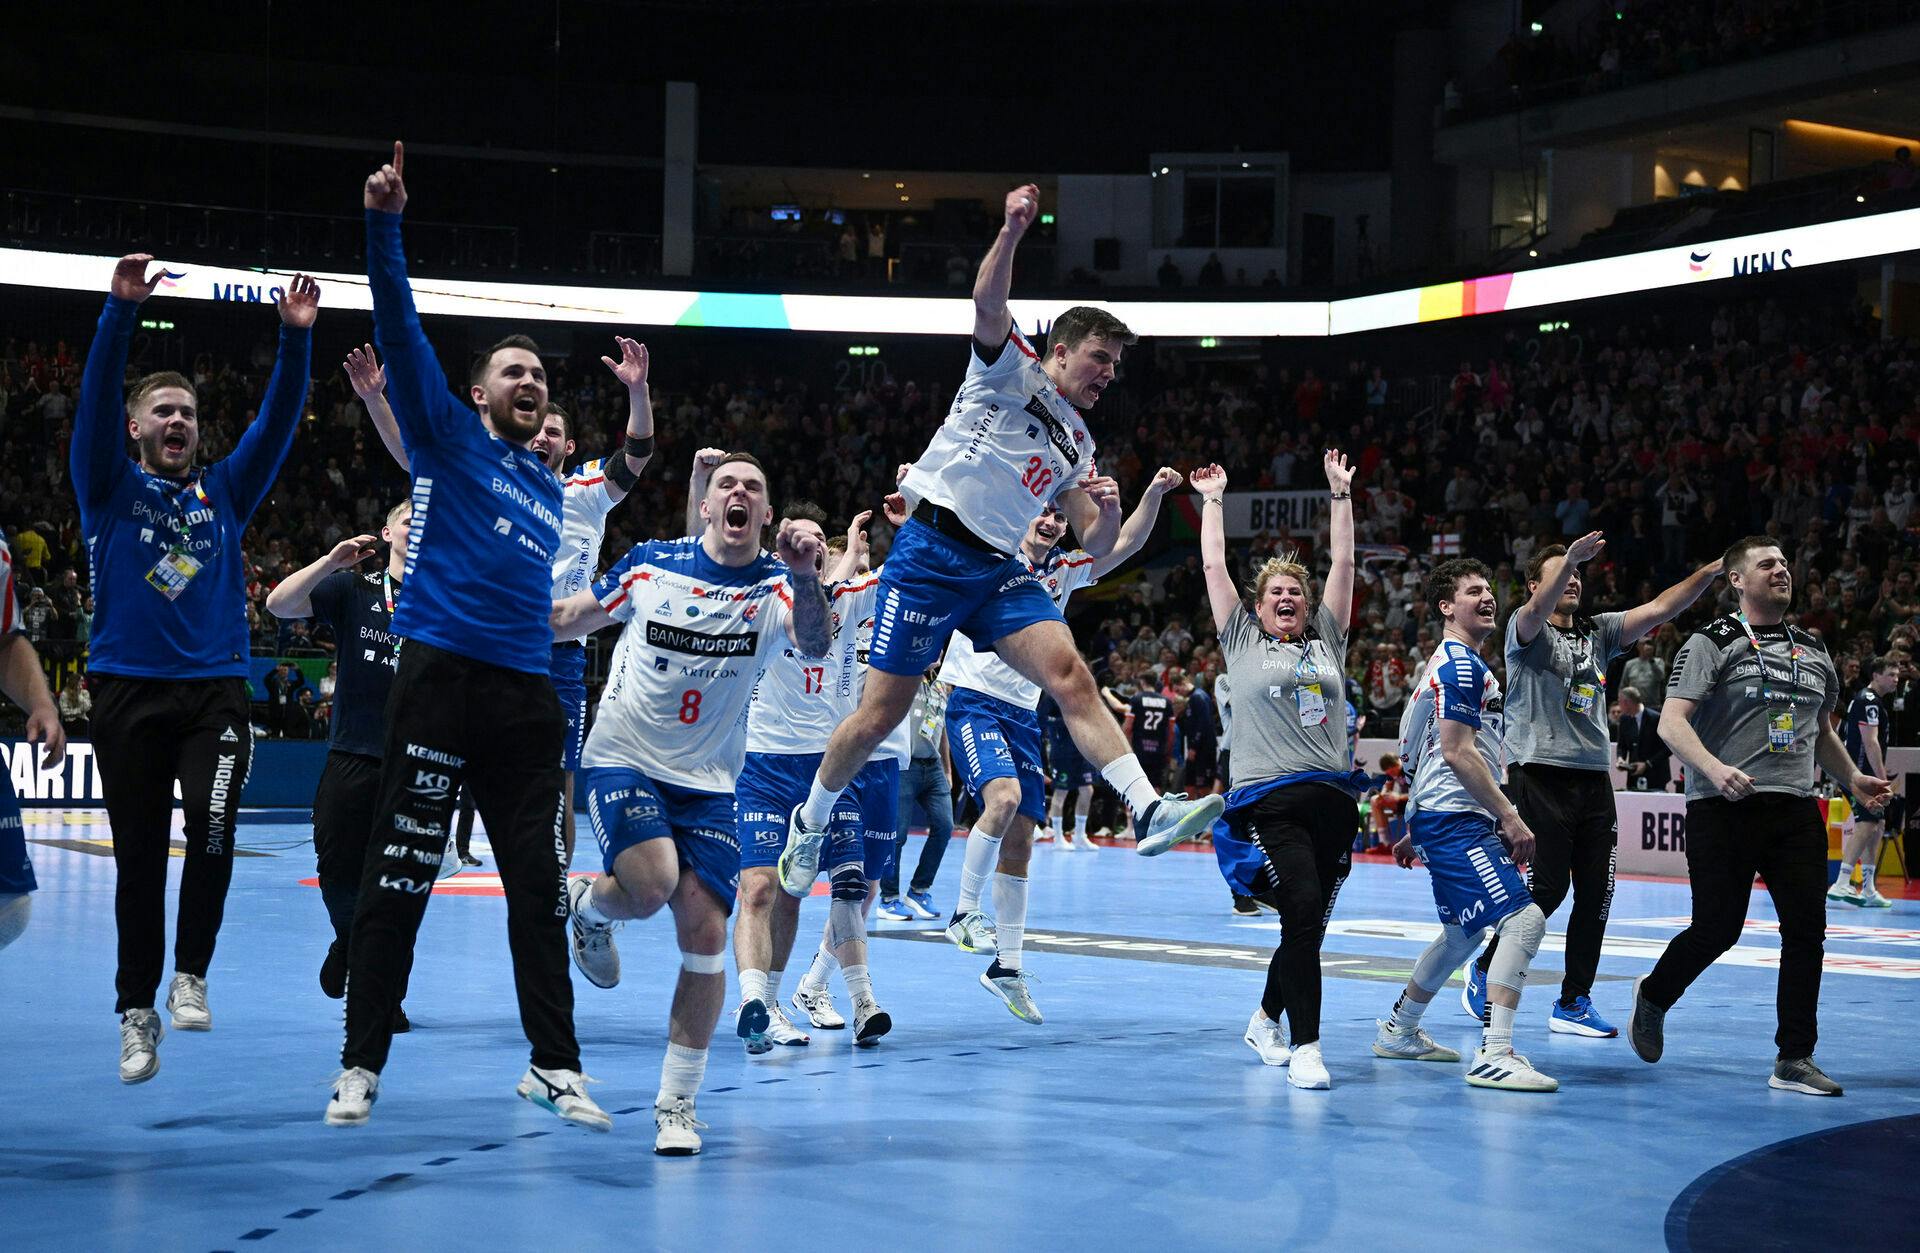 Handball - EHF 2024 Men's European Handball Championship - Preliminary Round - Group D - Faroe Islands v Norway - Mercedes-Benz Arena, Berlin, Germany - January 13, 2024 Faroe Islands players celebrate after the match REUTERS/Annegret Hilse